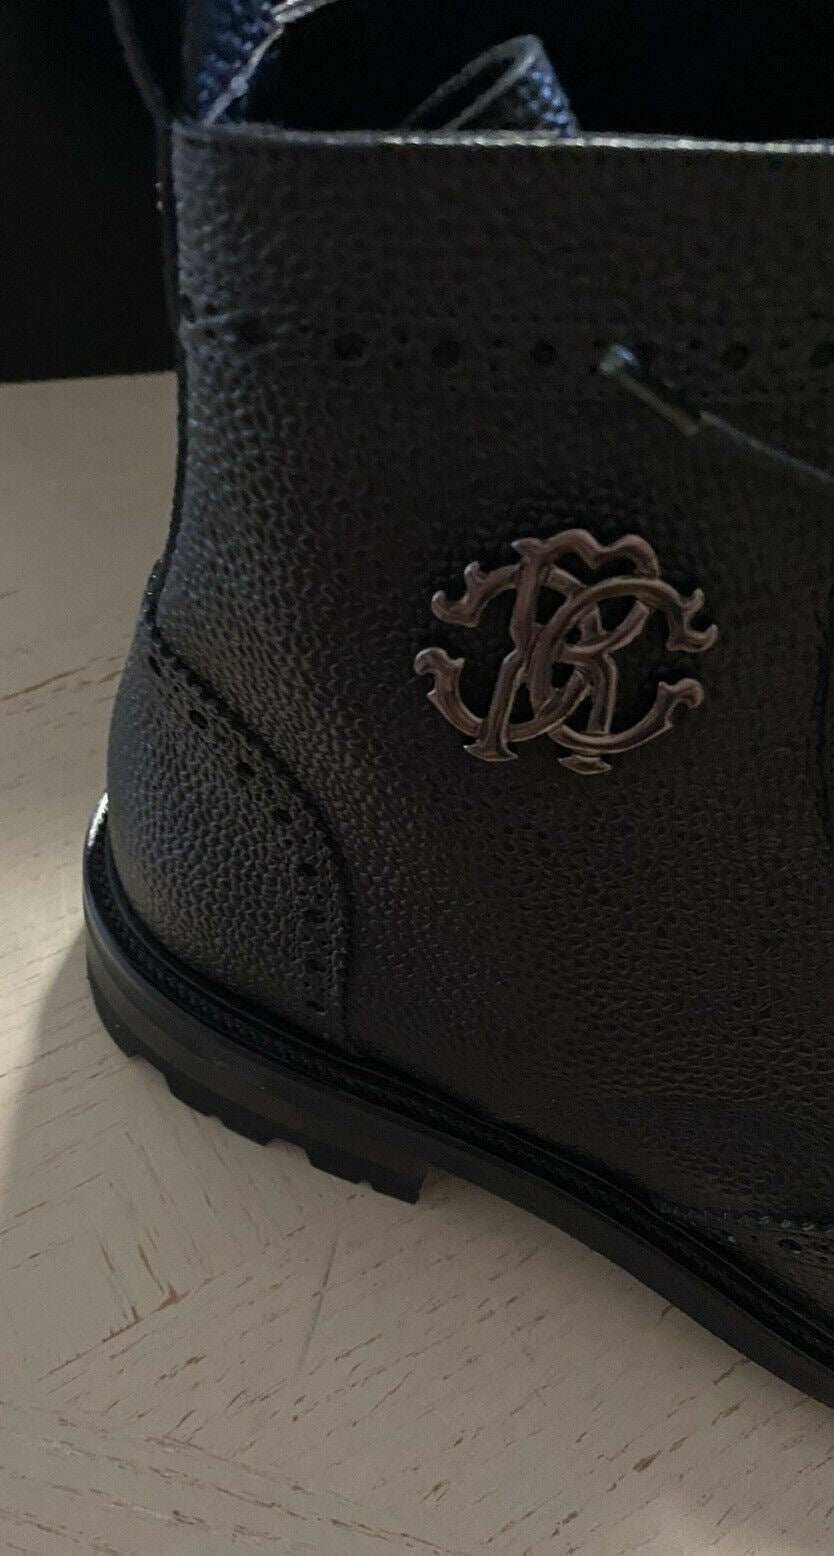 New $720 Roberto Cavalli Men’s Leather Boots Shoes Black 12 US/45 Eu Italy